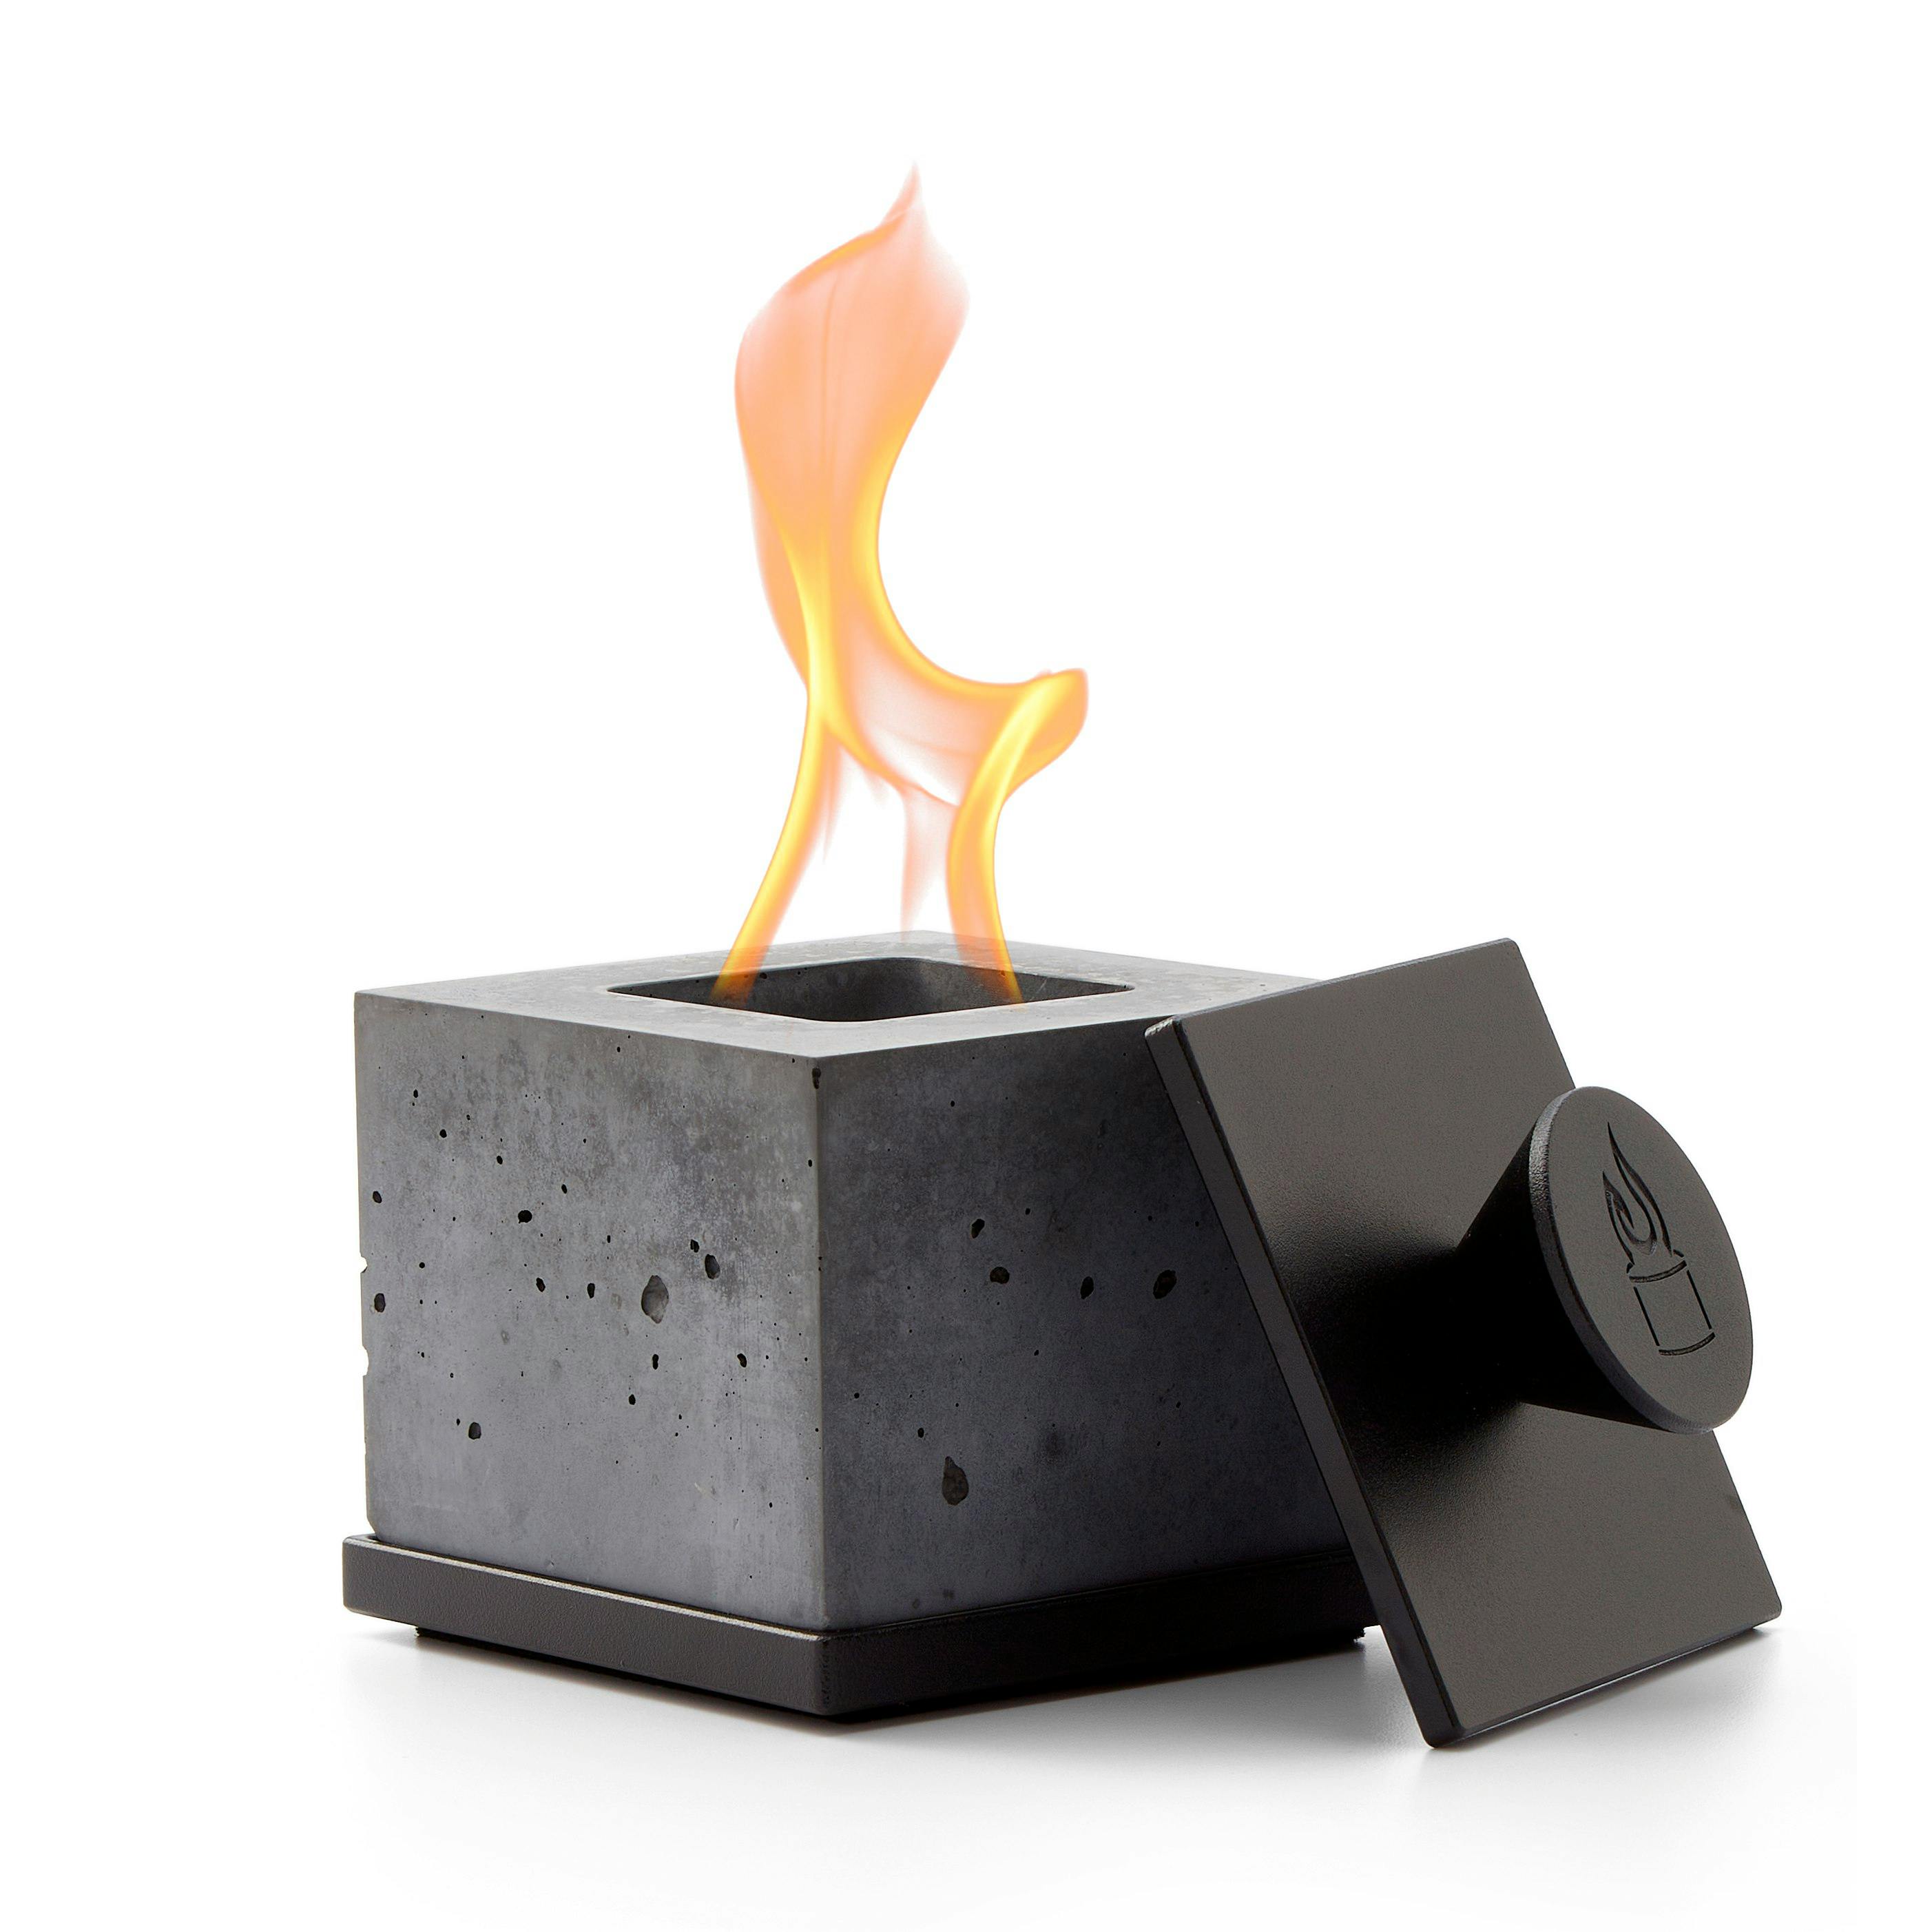 Personal Square Concrete Fireplace Kit